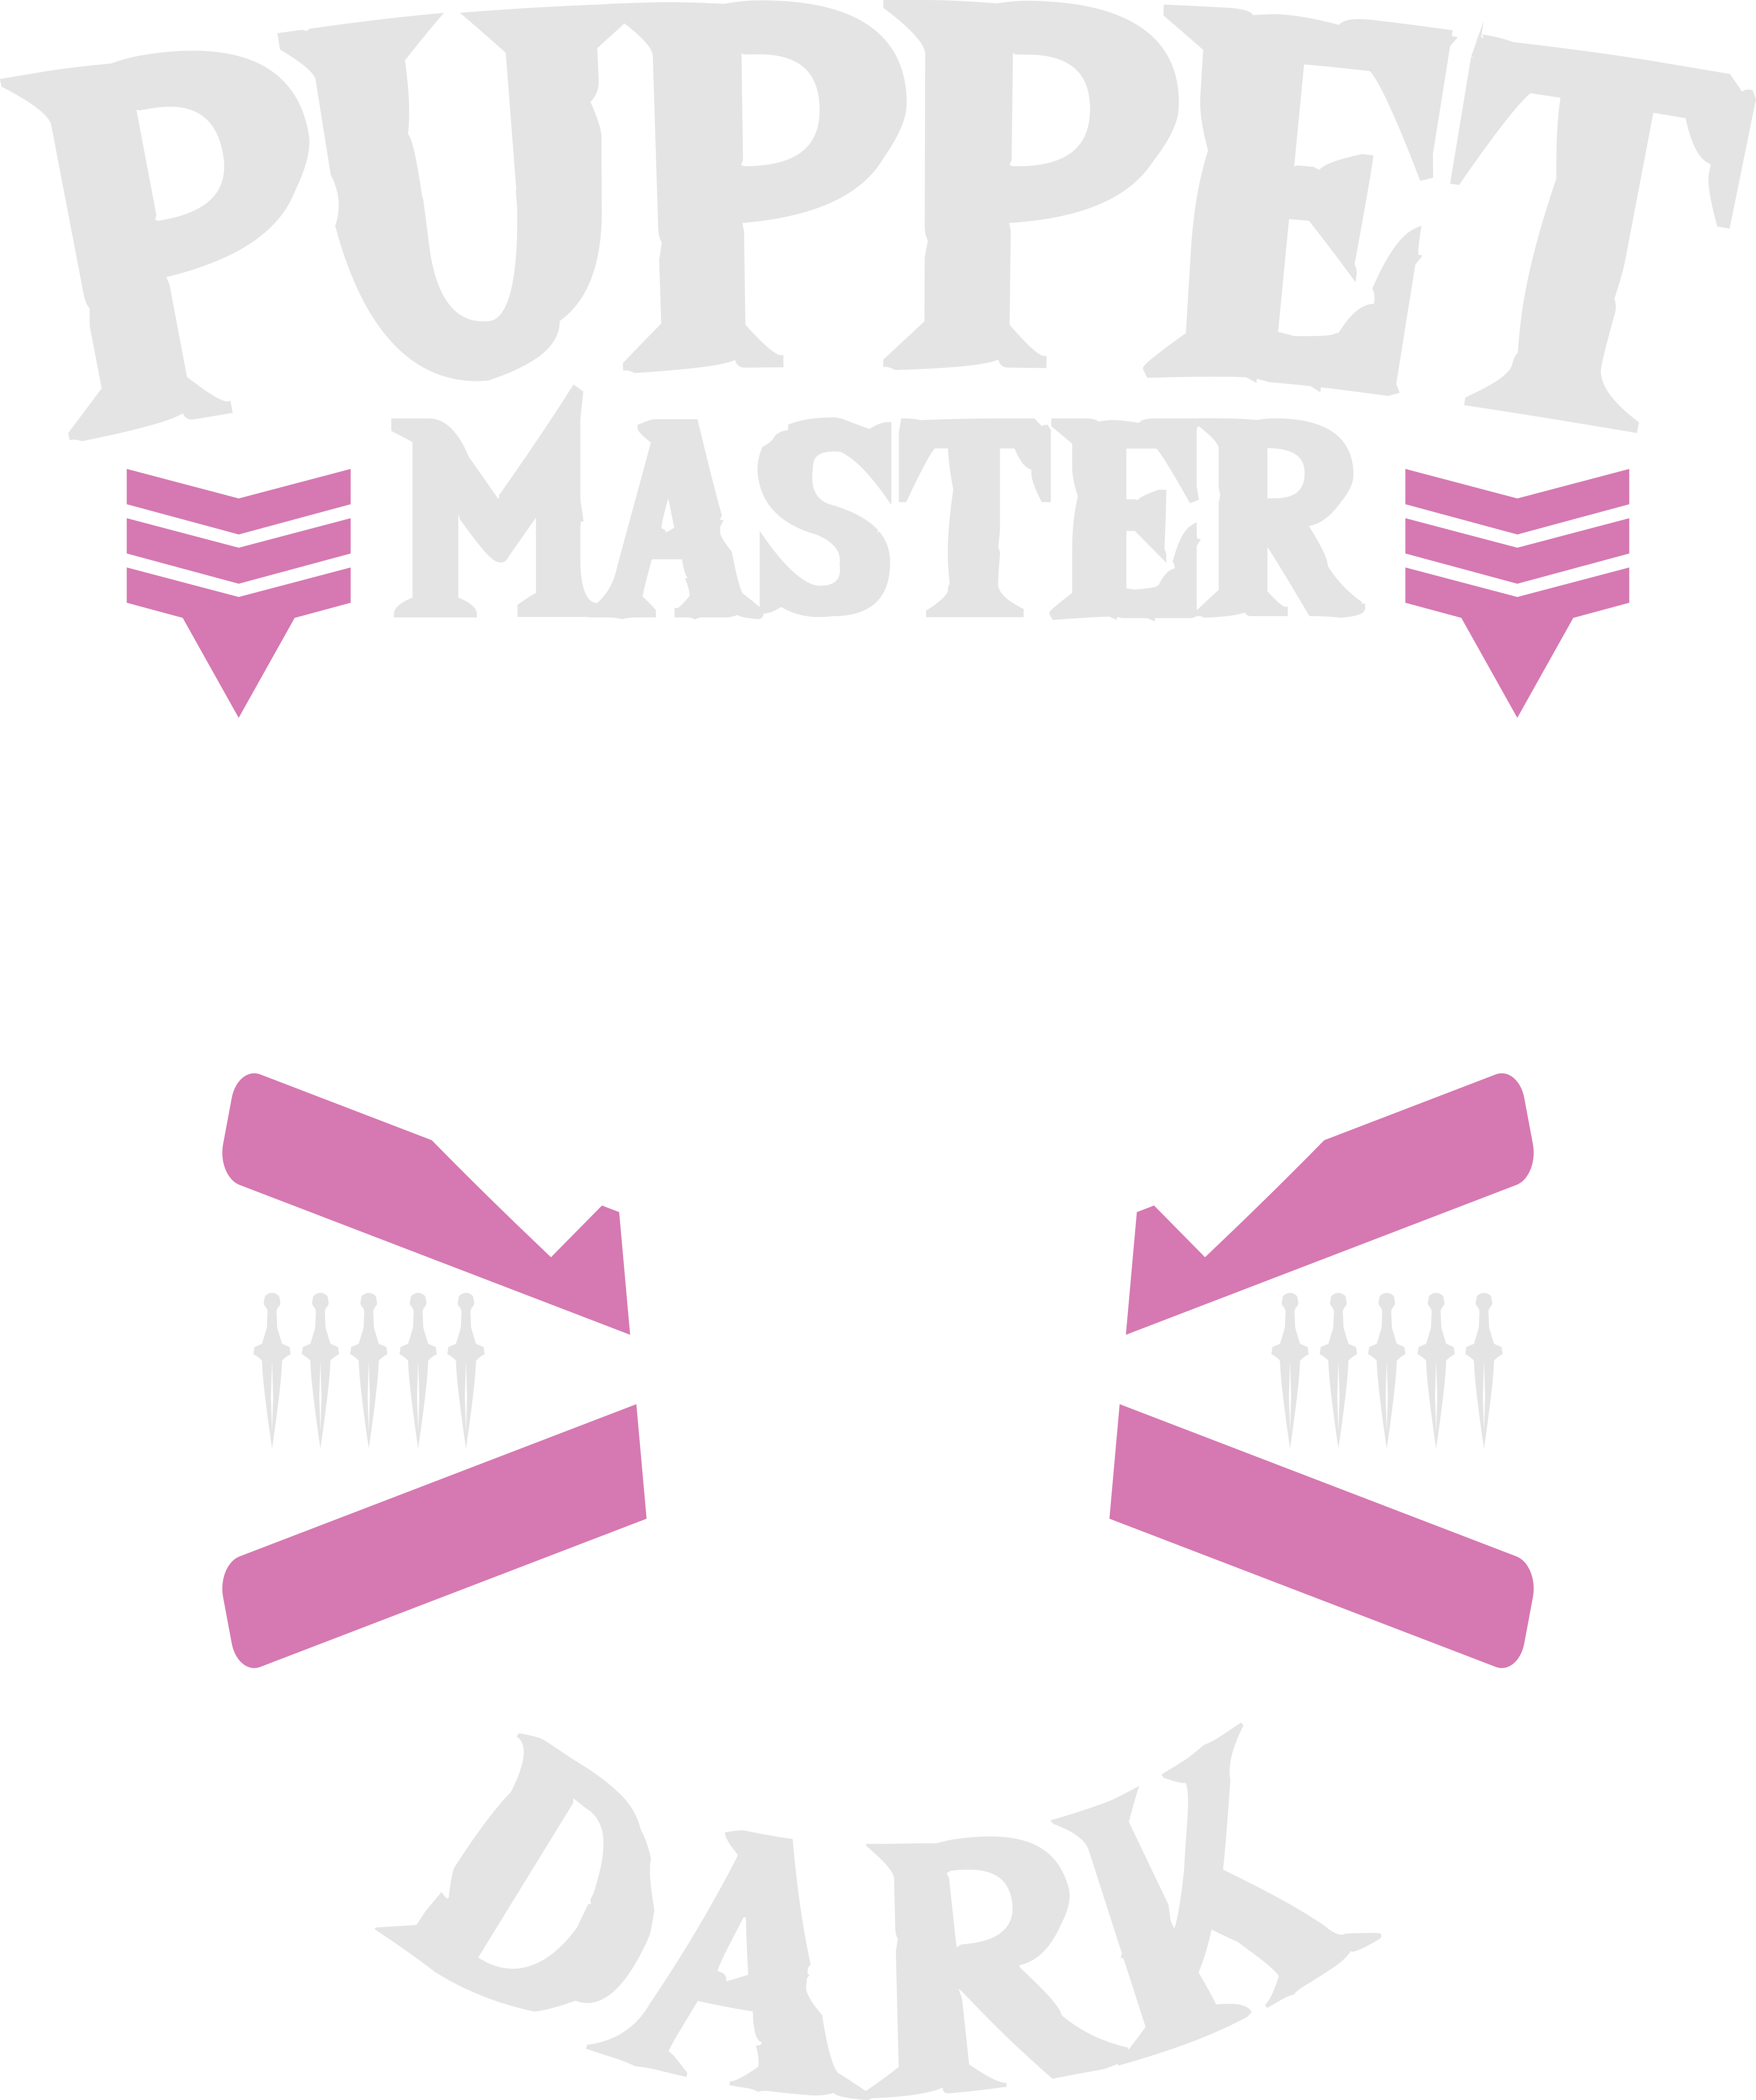 Puppetmaster Dark (Bullet Club) Logo by DarkVoidPictures on DeviantArt